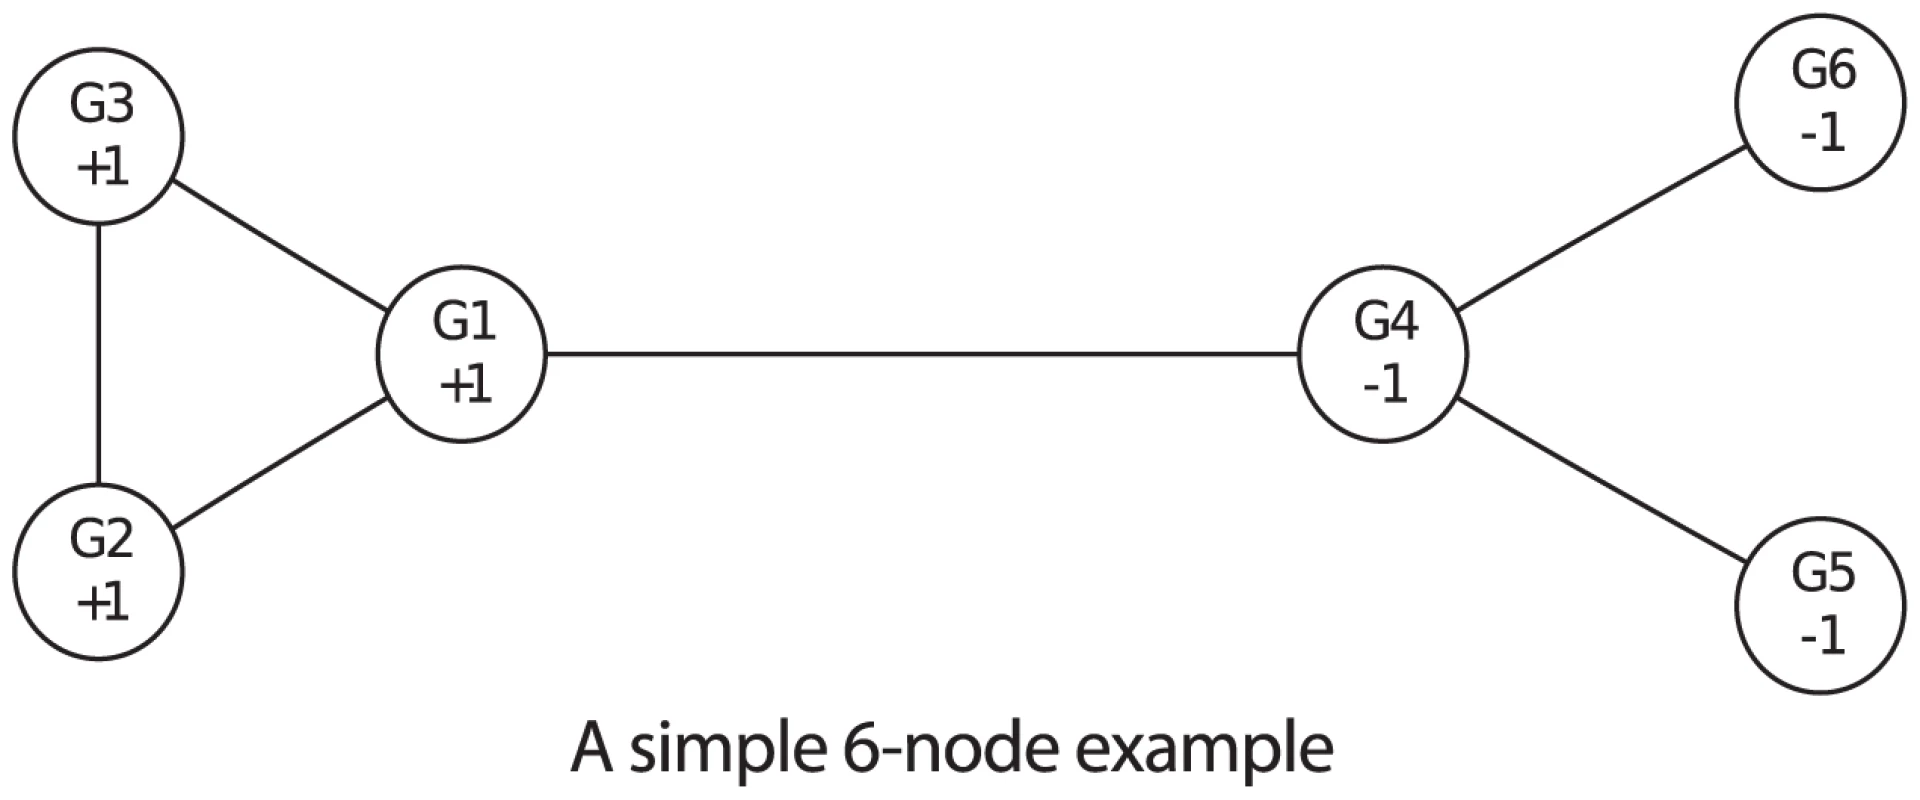 A simple 6-node network.